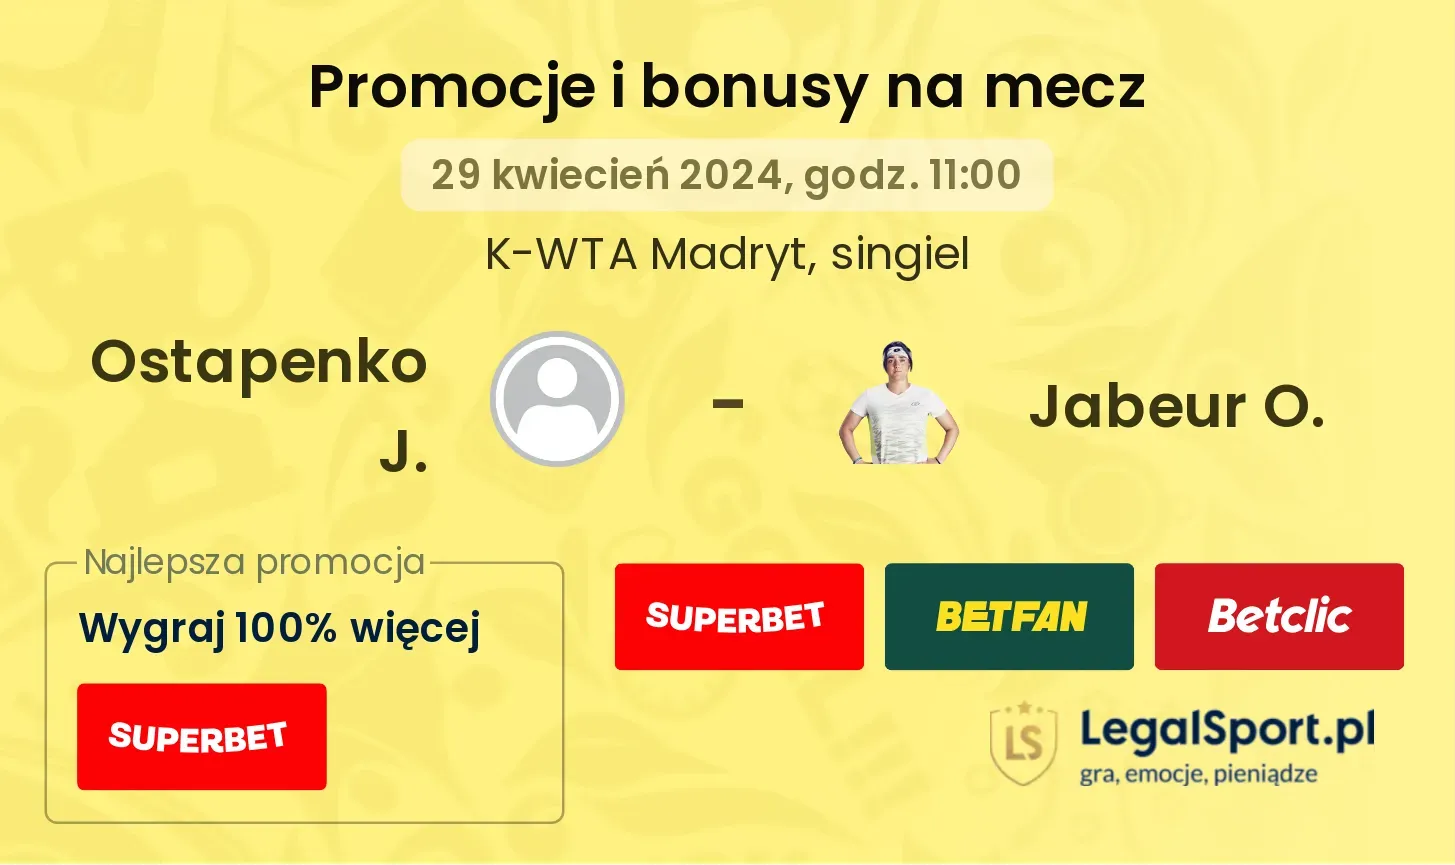 Ostapenko J. - Jabeur O. promocje bonusy na mecz